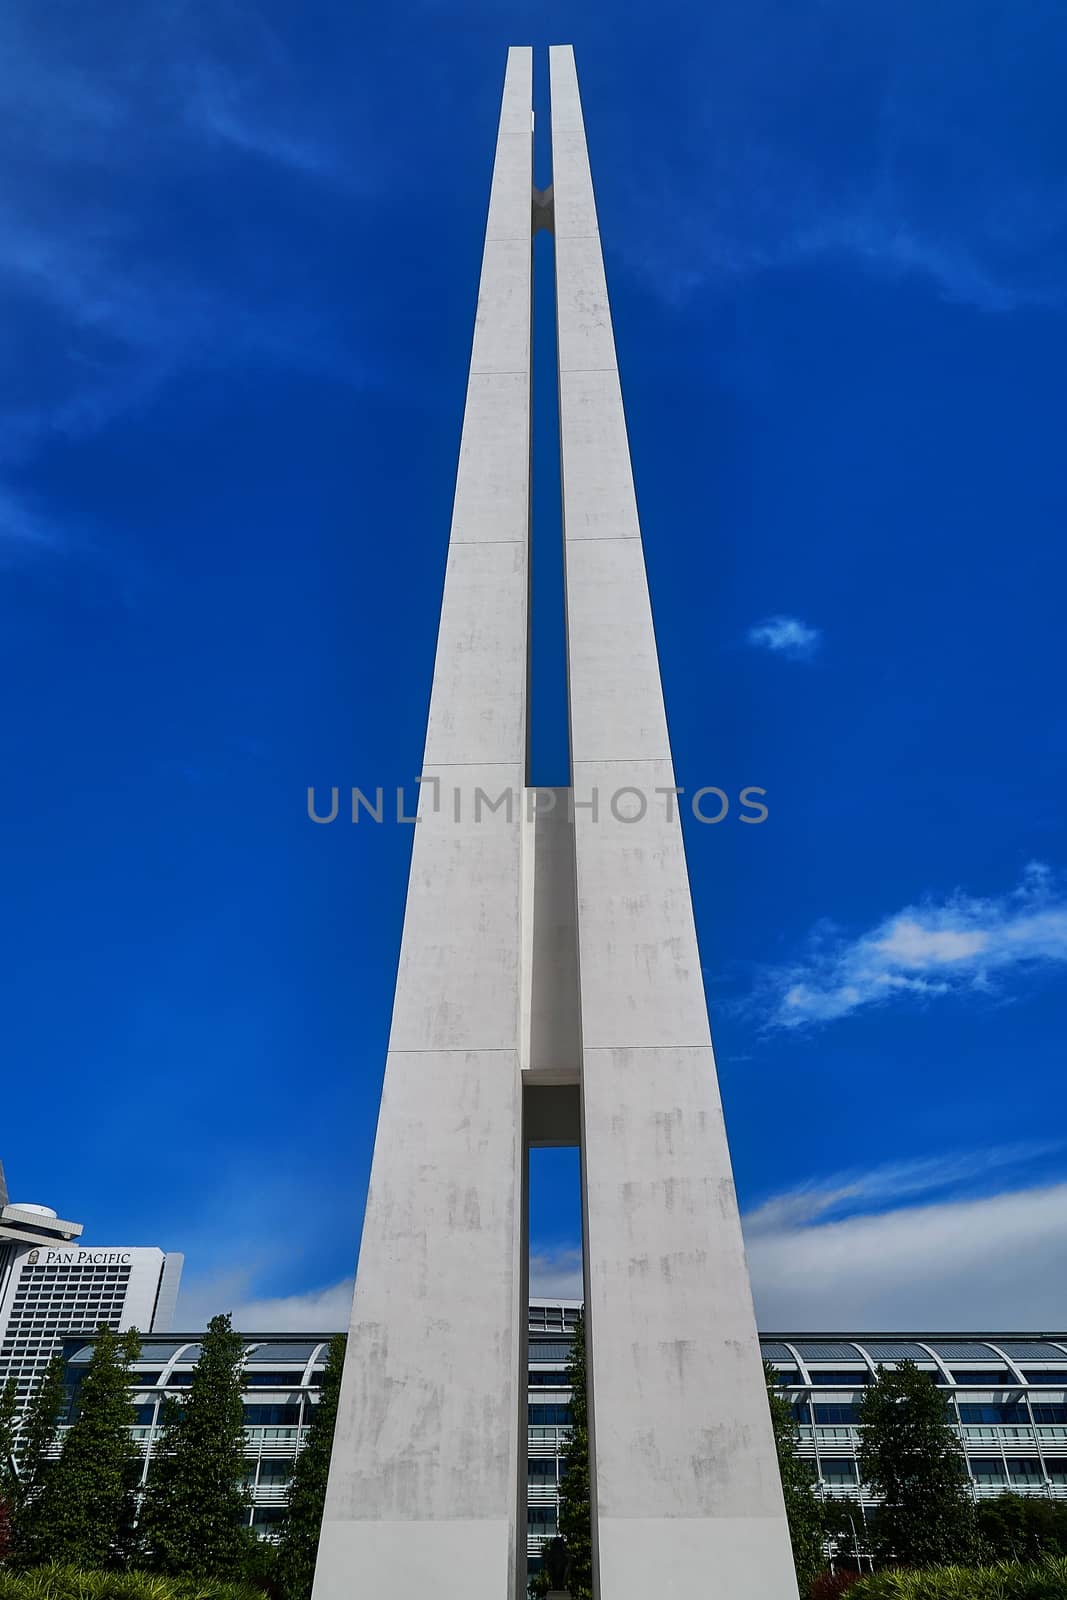 SINGAPORE war memorial monument by Sirius3001